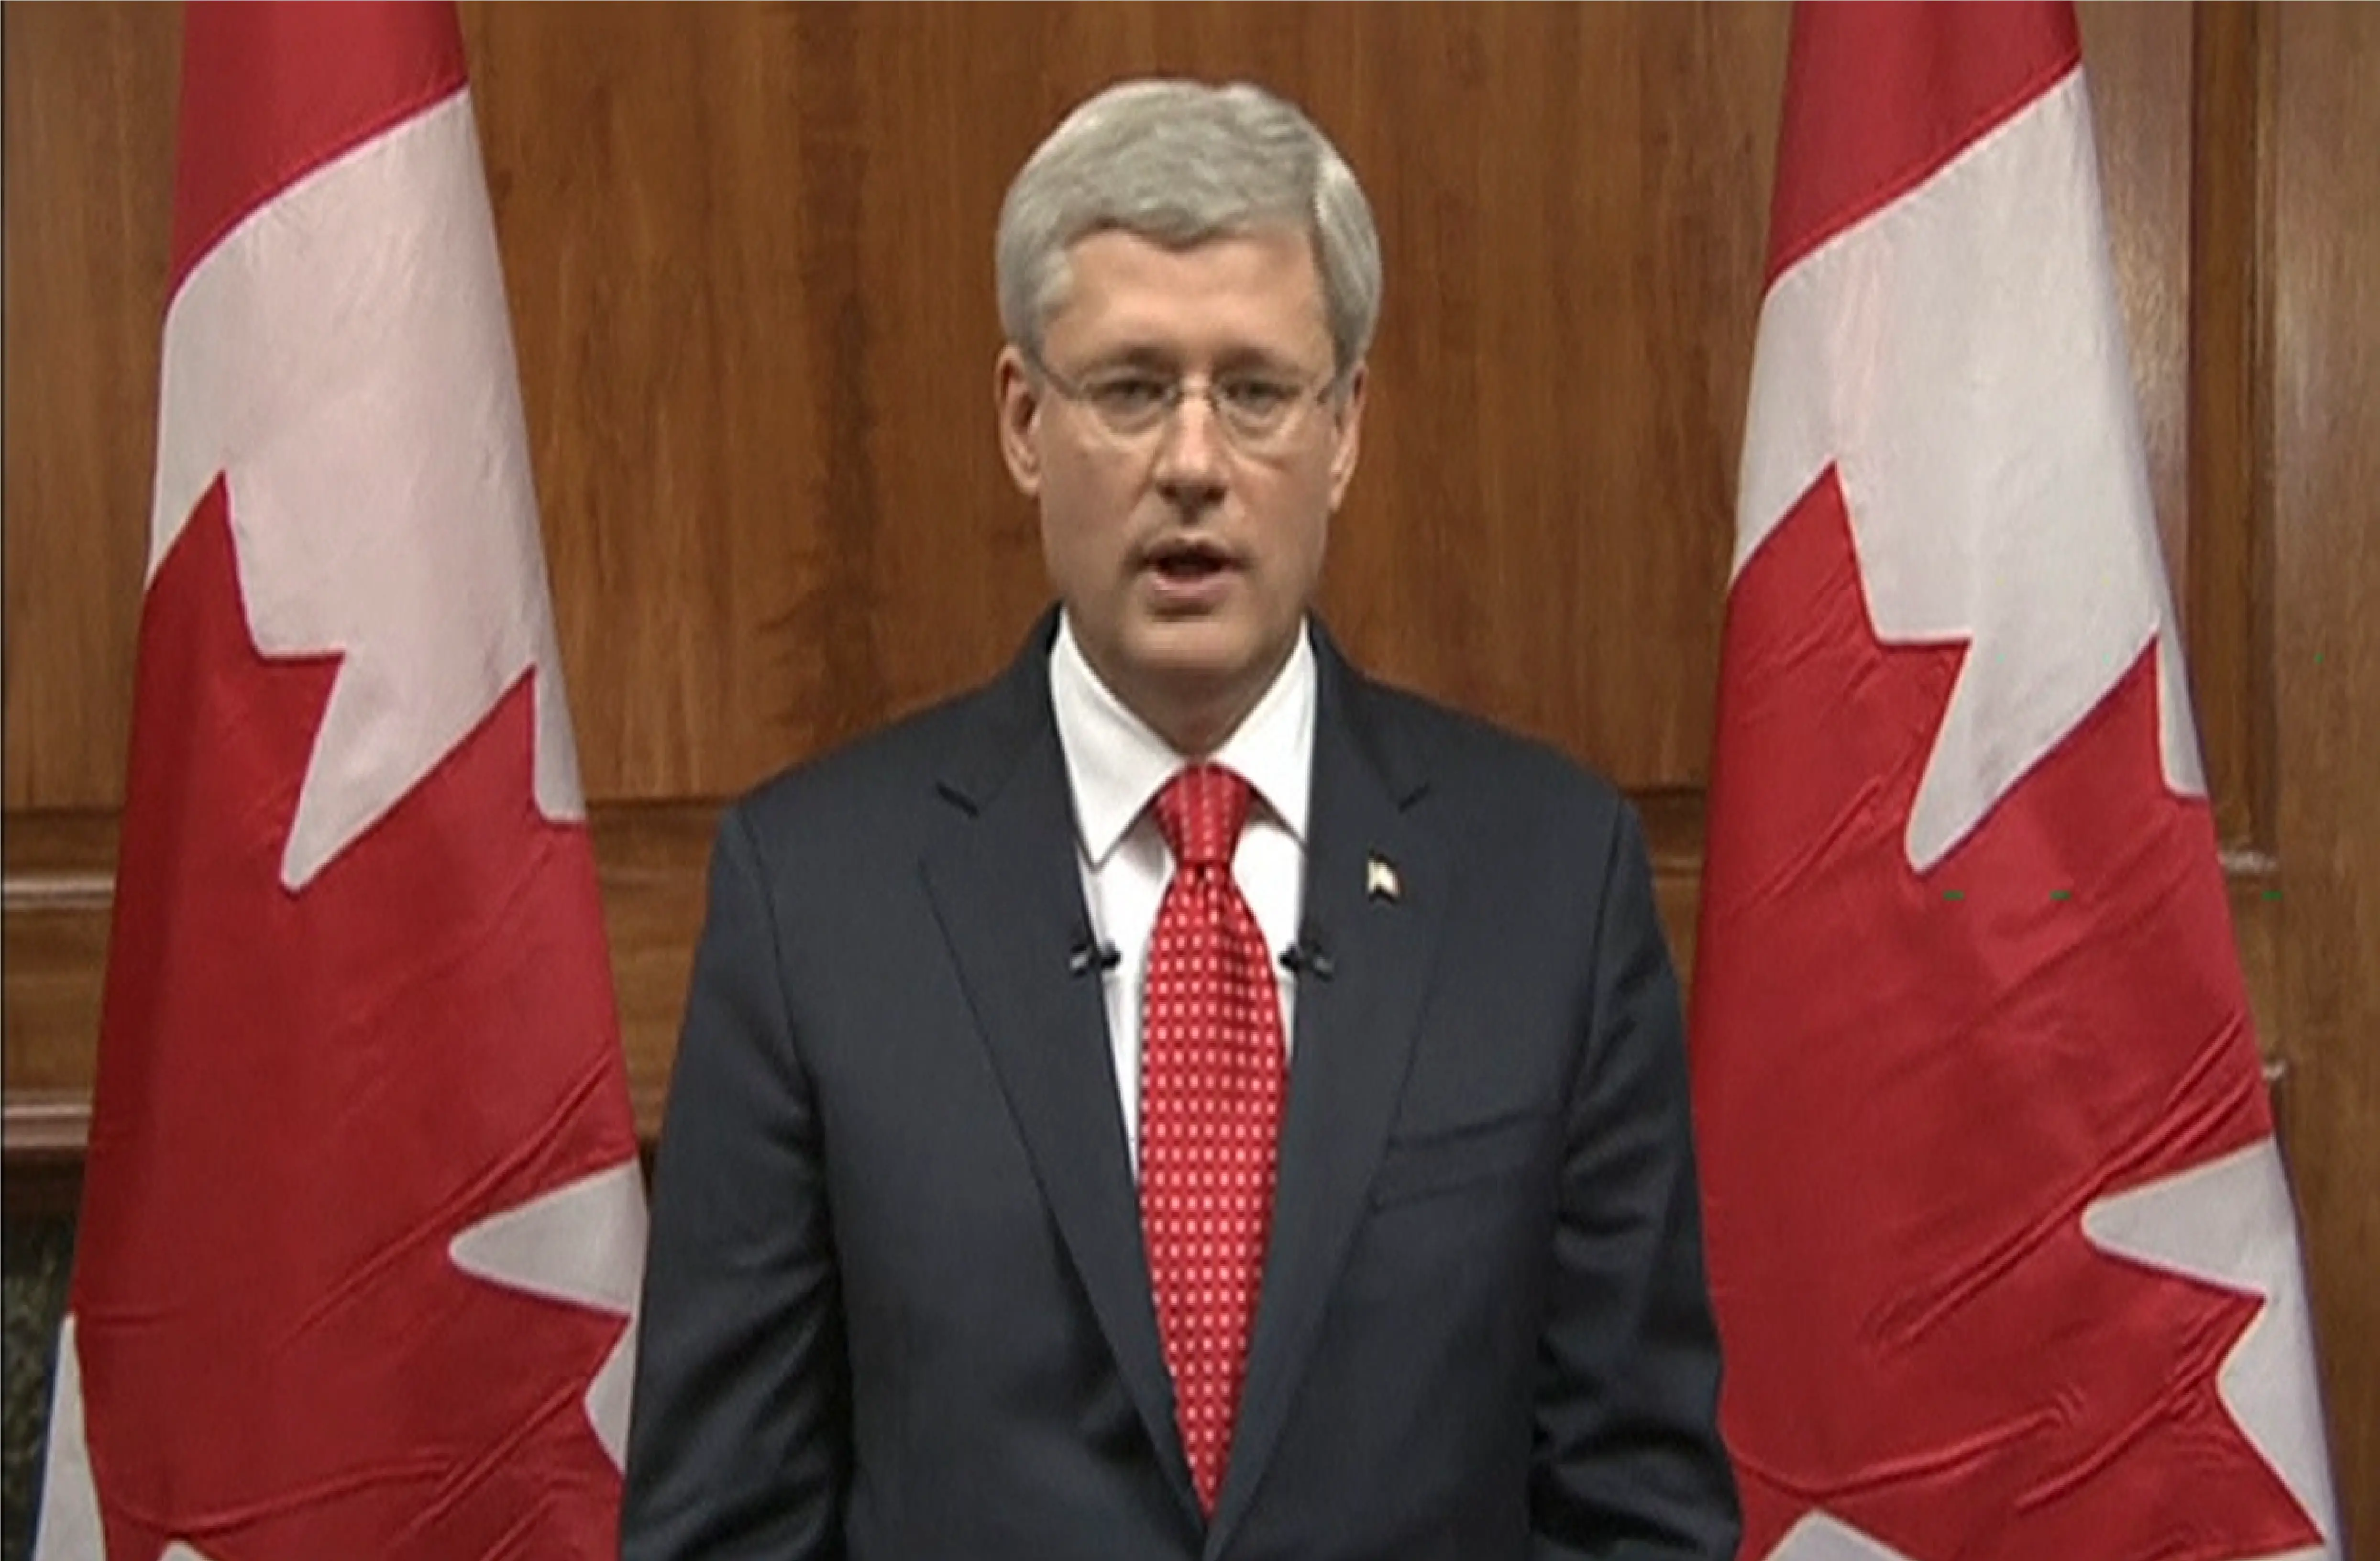 Perdana Menteri (PM) Kanada Stephen Harper angkat bicara soal serangkaian serangan yang terjadi di negaranya. 